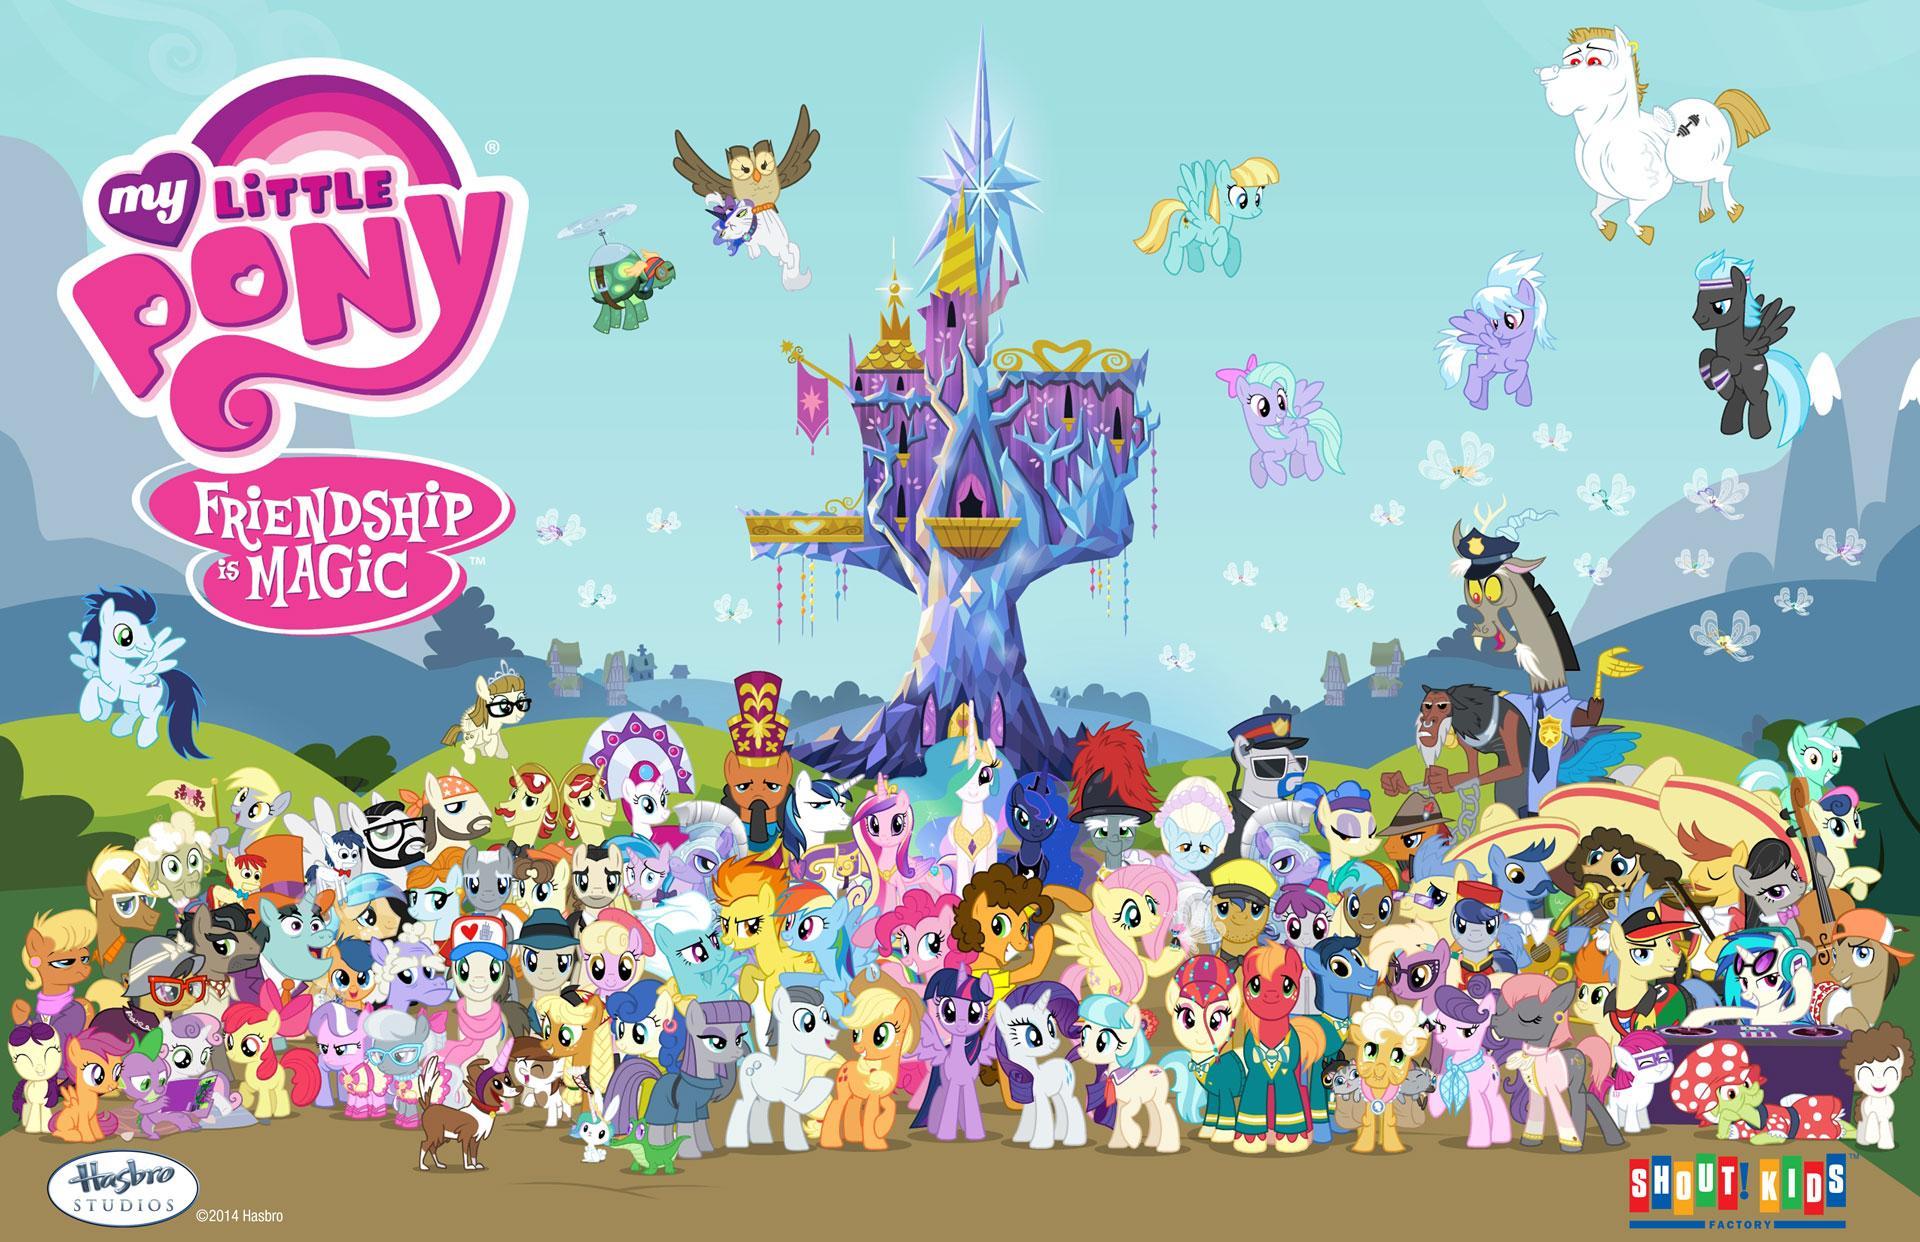 My Little Pony: Friendship is Magic - wide 3